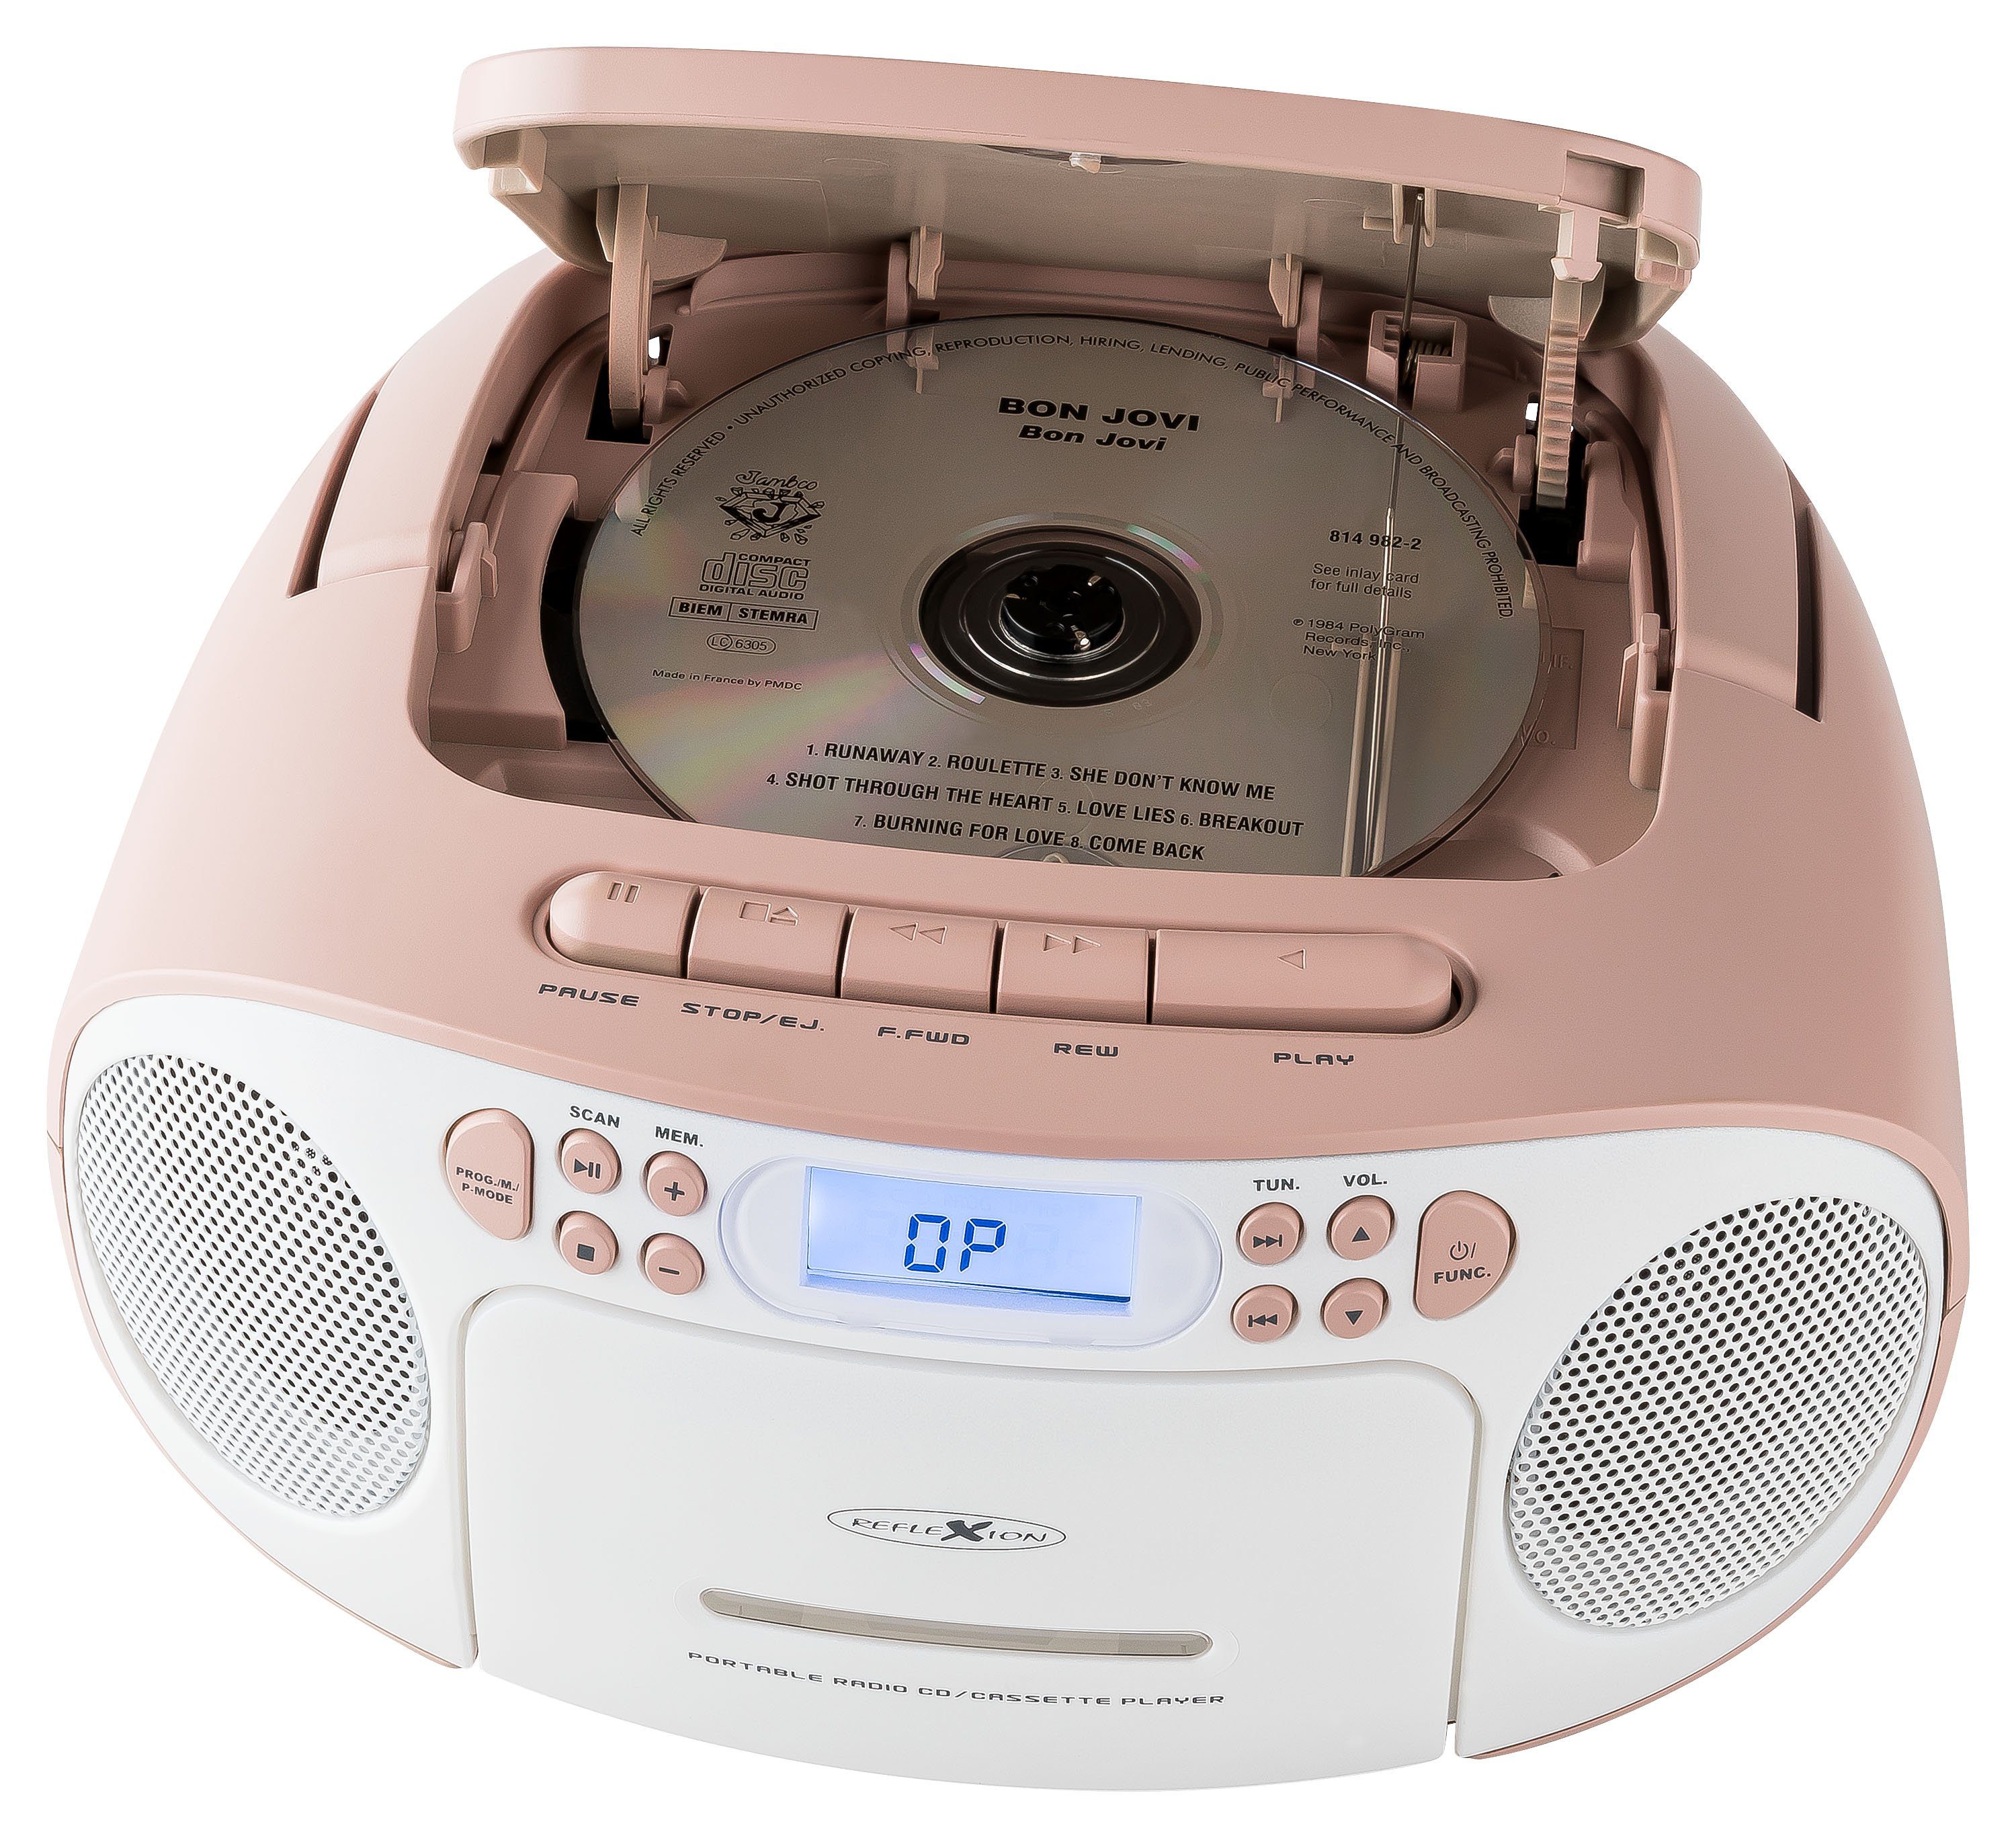 Reflexion RCR2260 Boombox (UKW PLL Stereo Radio, 20 W, Tragbare Boombox CD/Radio/Kassette, LCD-Display, AUX-Eingang, Kopfhörer-Anschluss) weiß/pink